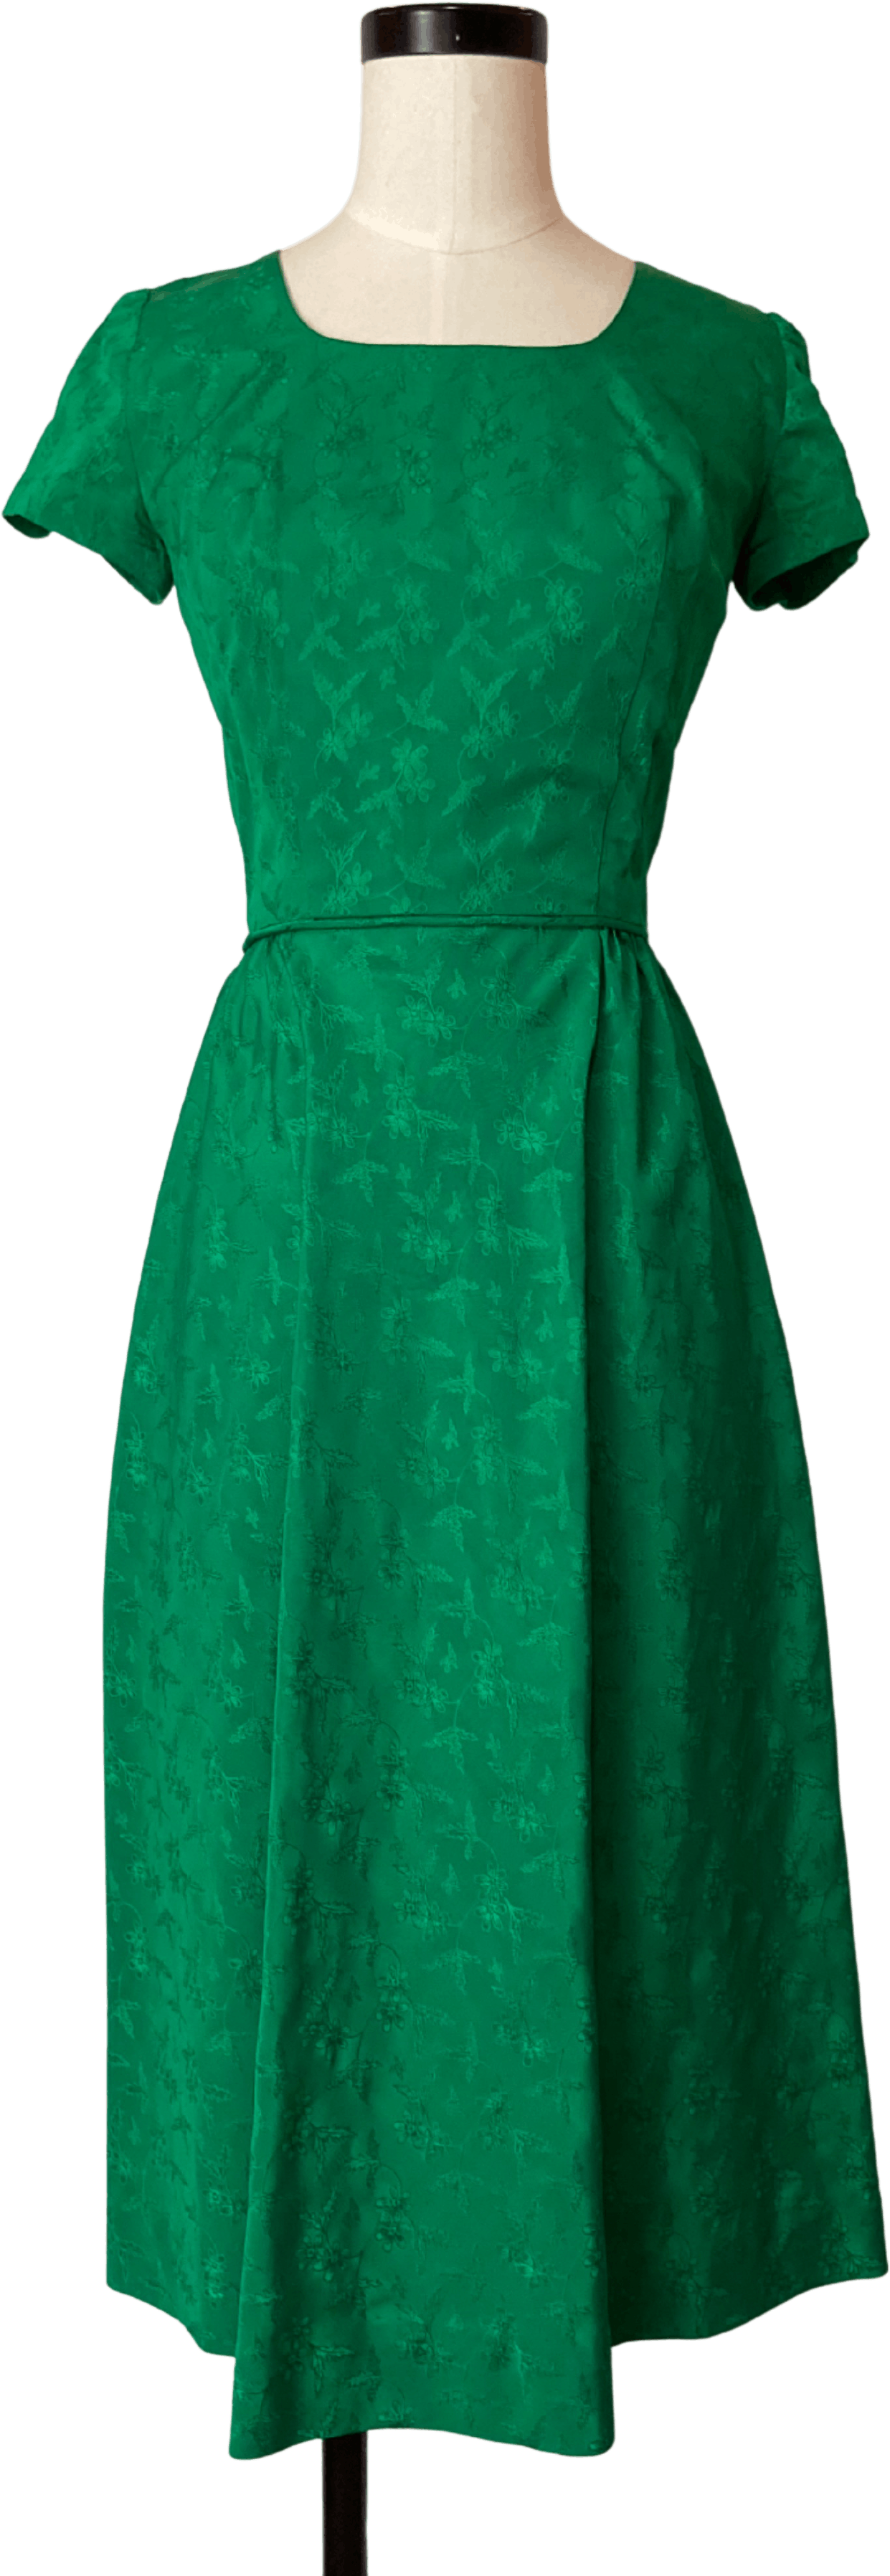 Vintage 50’s/60’s Kelly Green Floral Brocade Fit & Flare Cocktail Dress ...